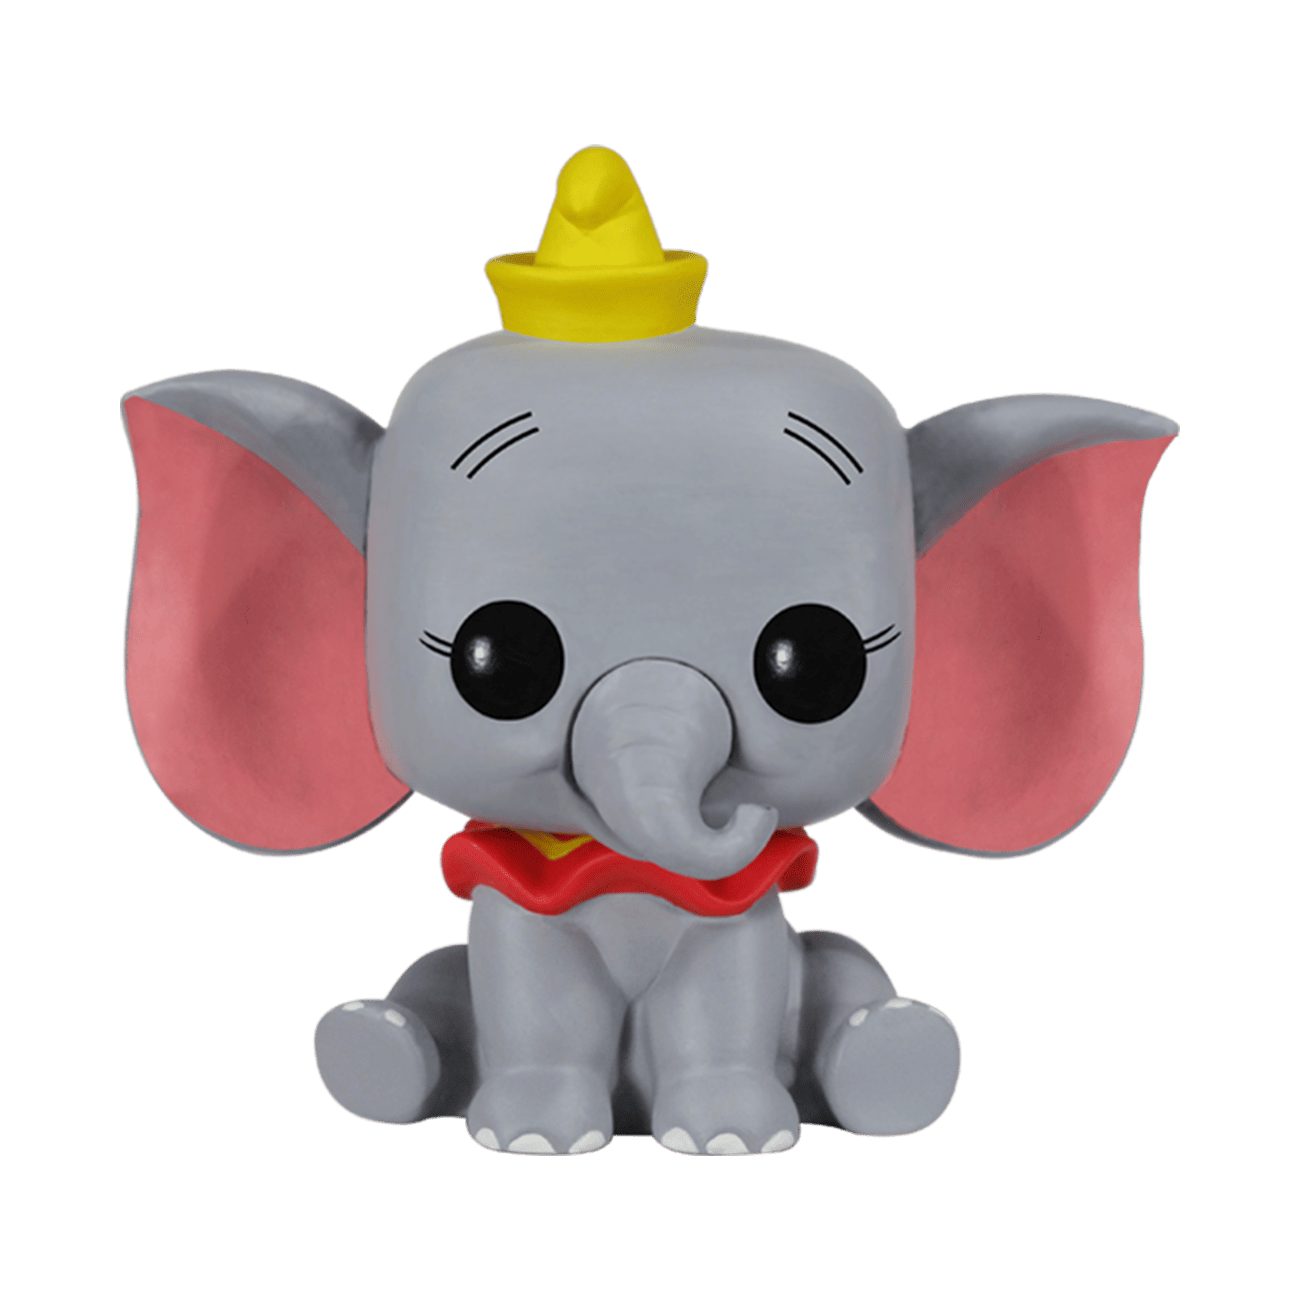 Buy Dumbo Pop! at